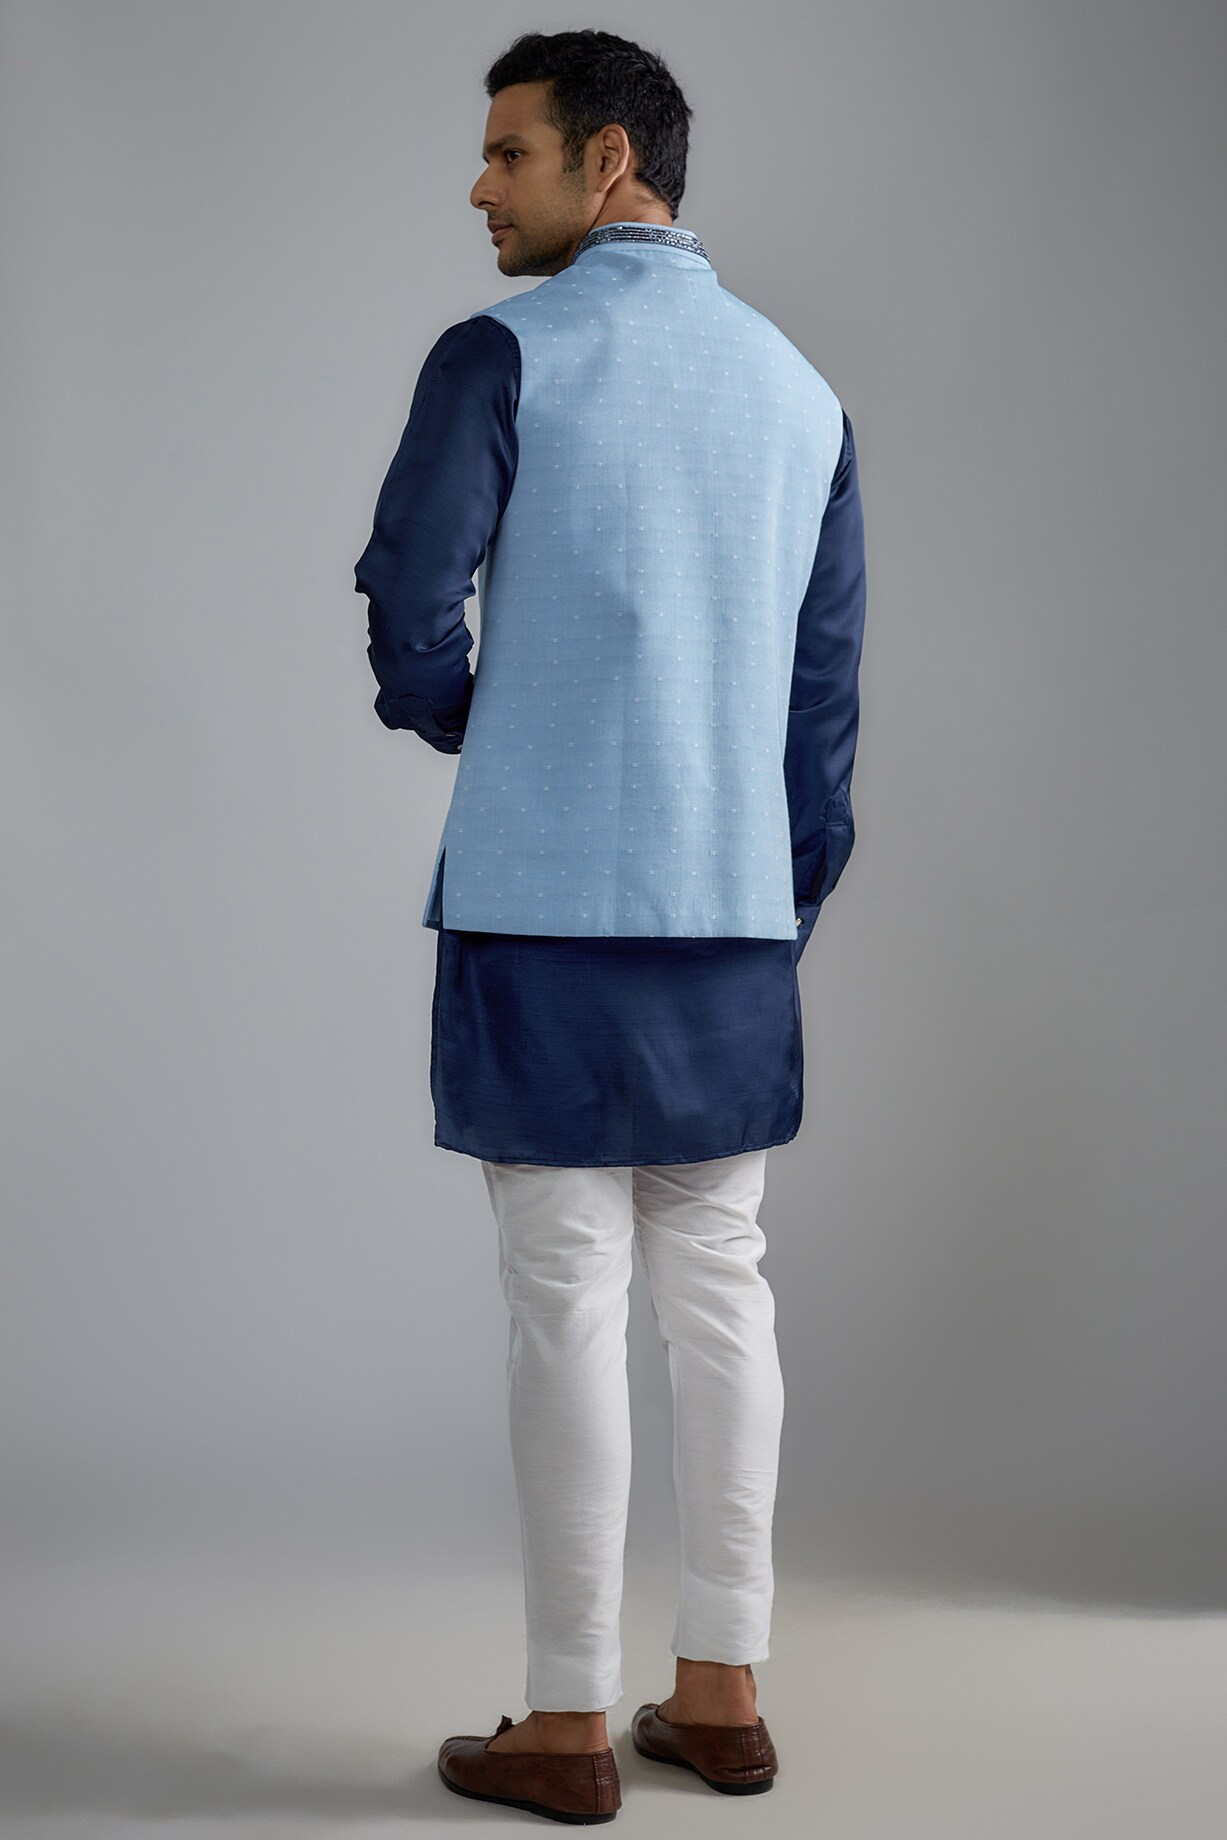 Sky Blue Textured Cotton Embroidered Bundi Set by Spring Break Men